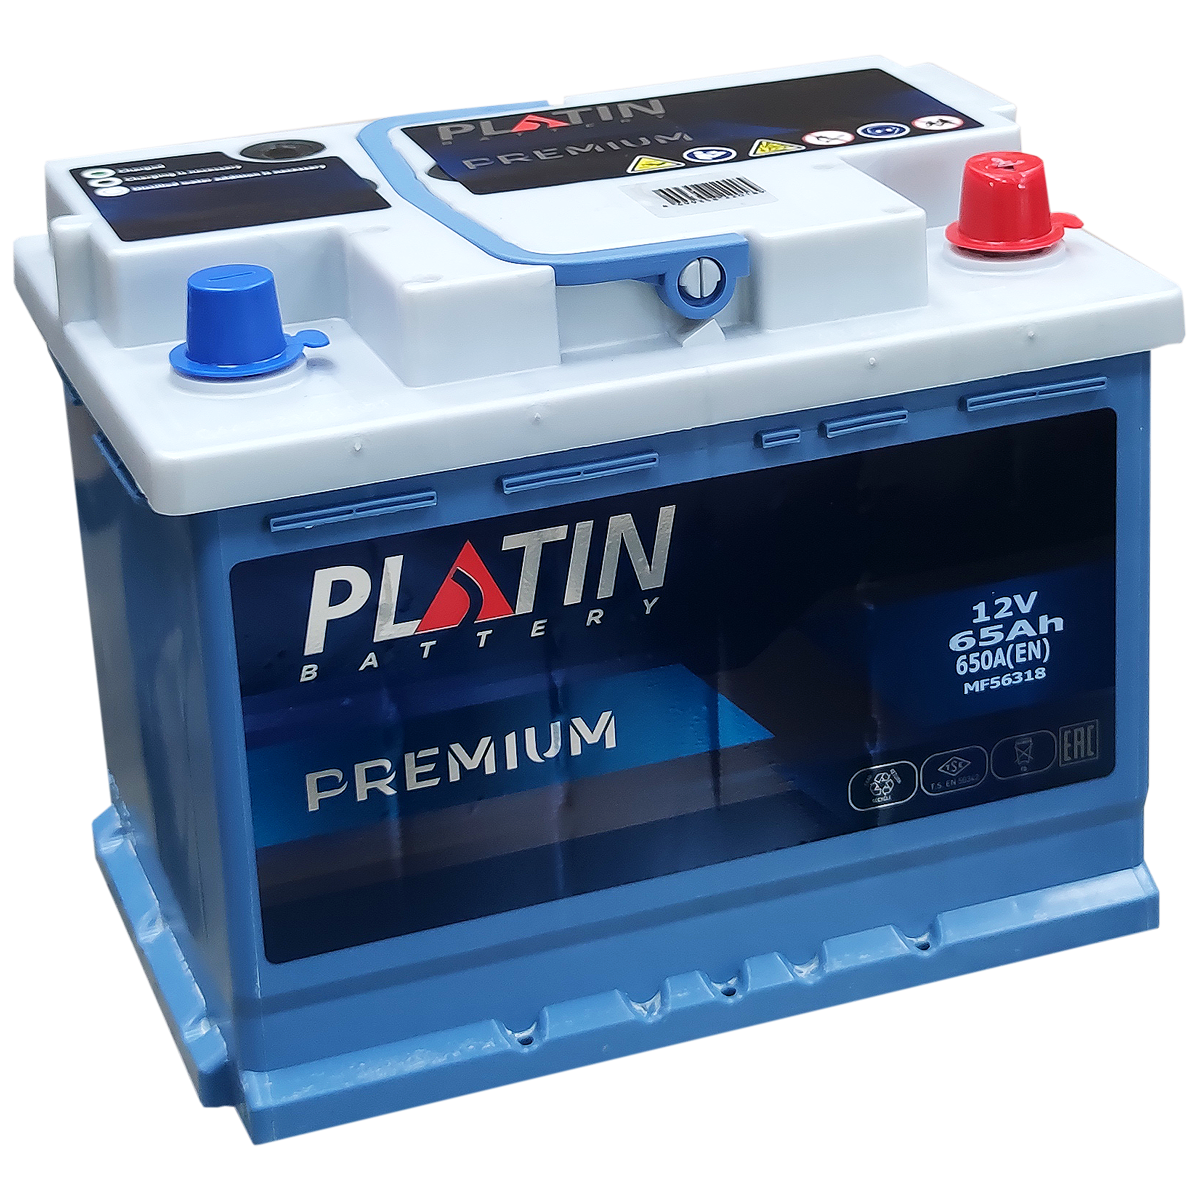 Аккумулятор 65 ампер час. Platin Premium 65 Ач. Аккумулятор Platin 65 Ah. Platin Premium 60 Ah аккумулятор. Аккумулятор 65 Ач Premium.